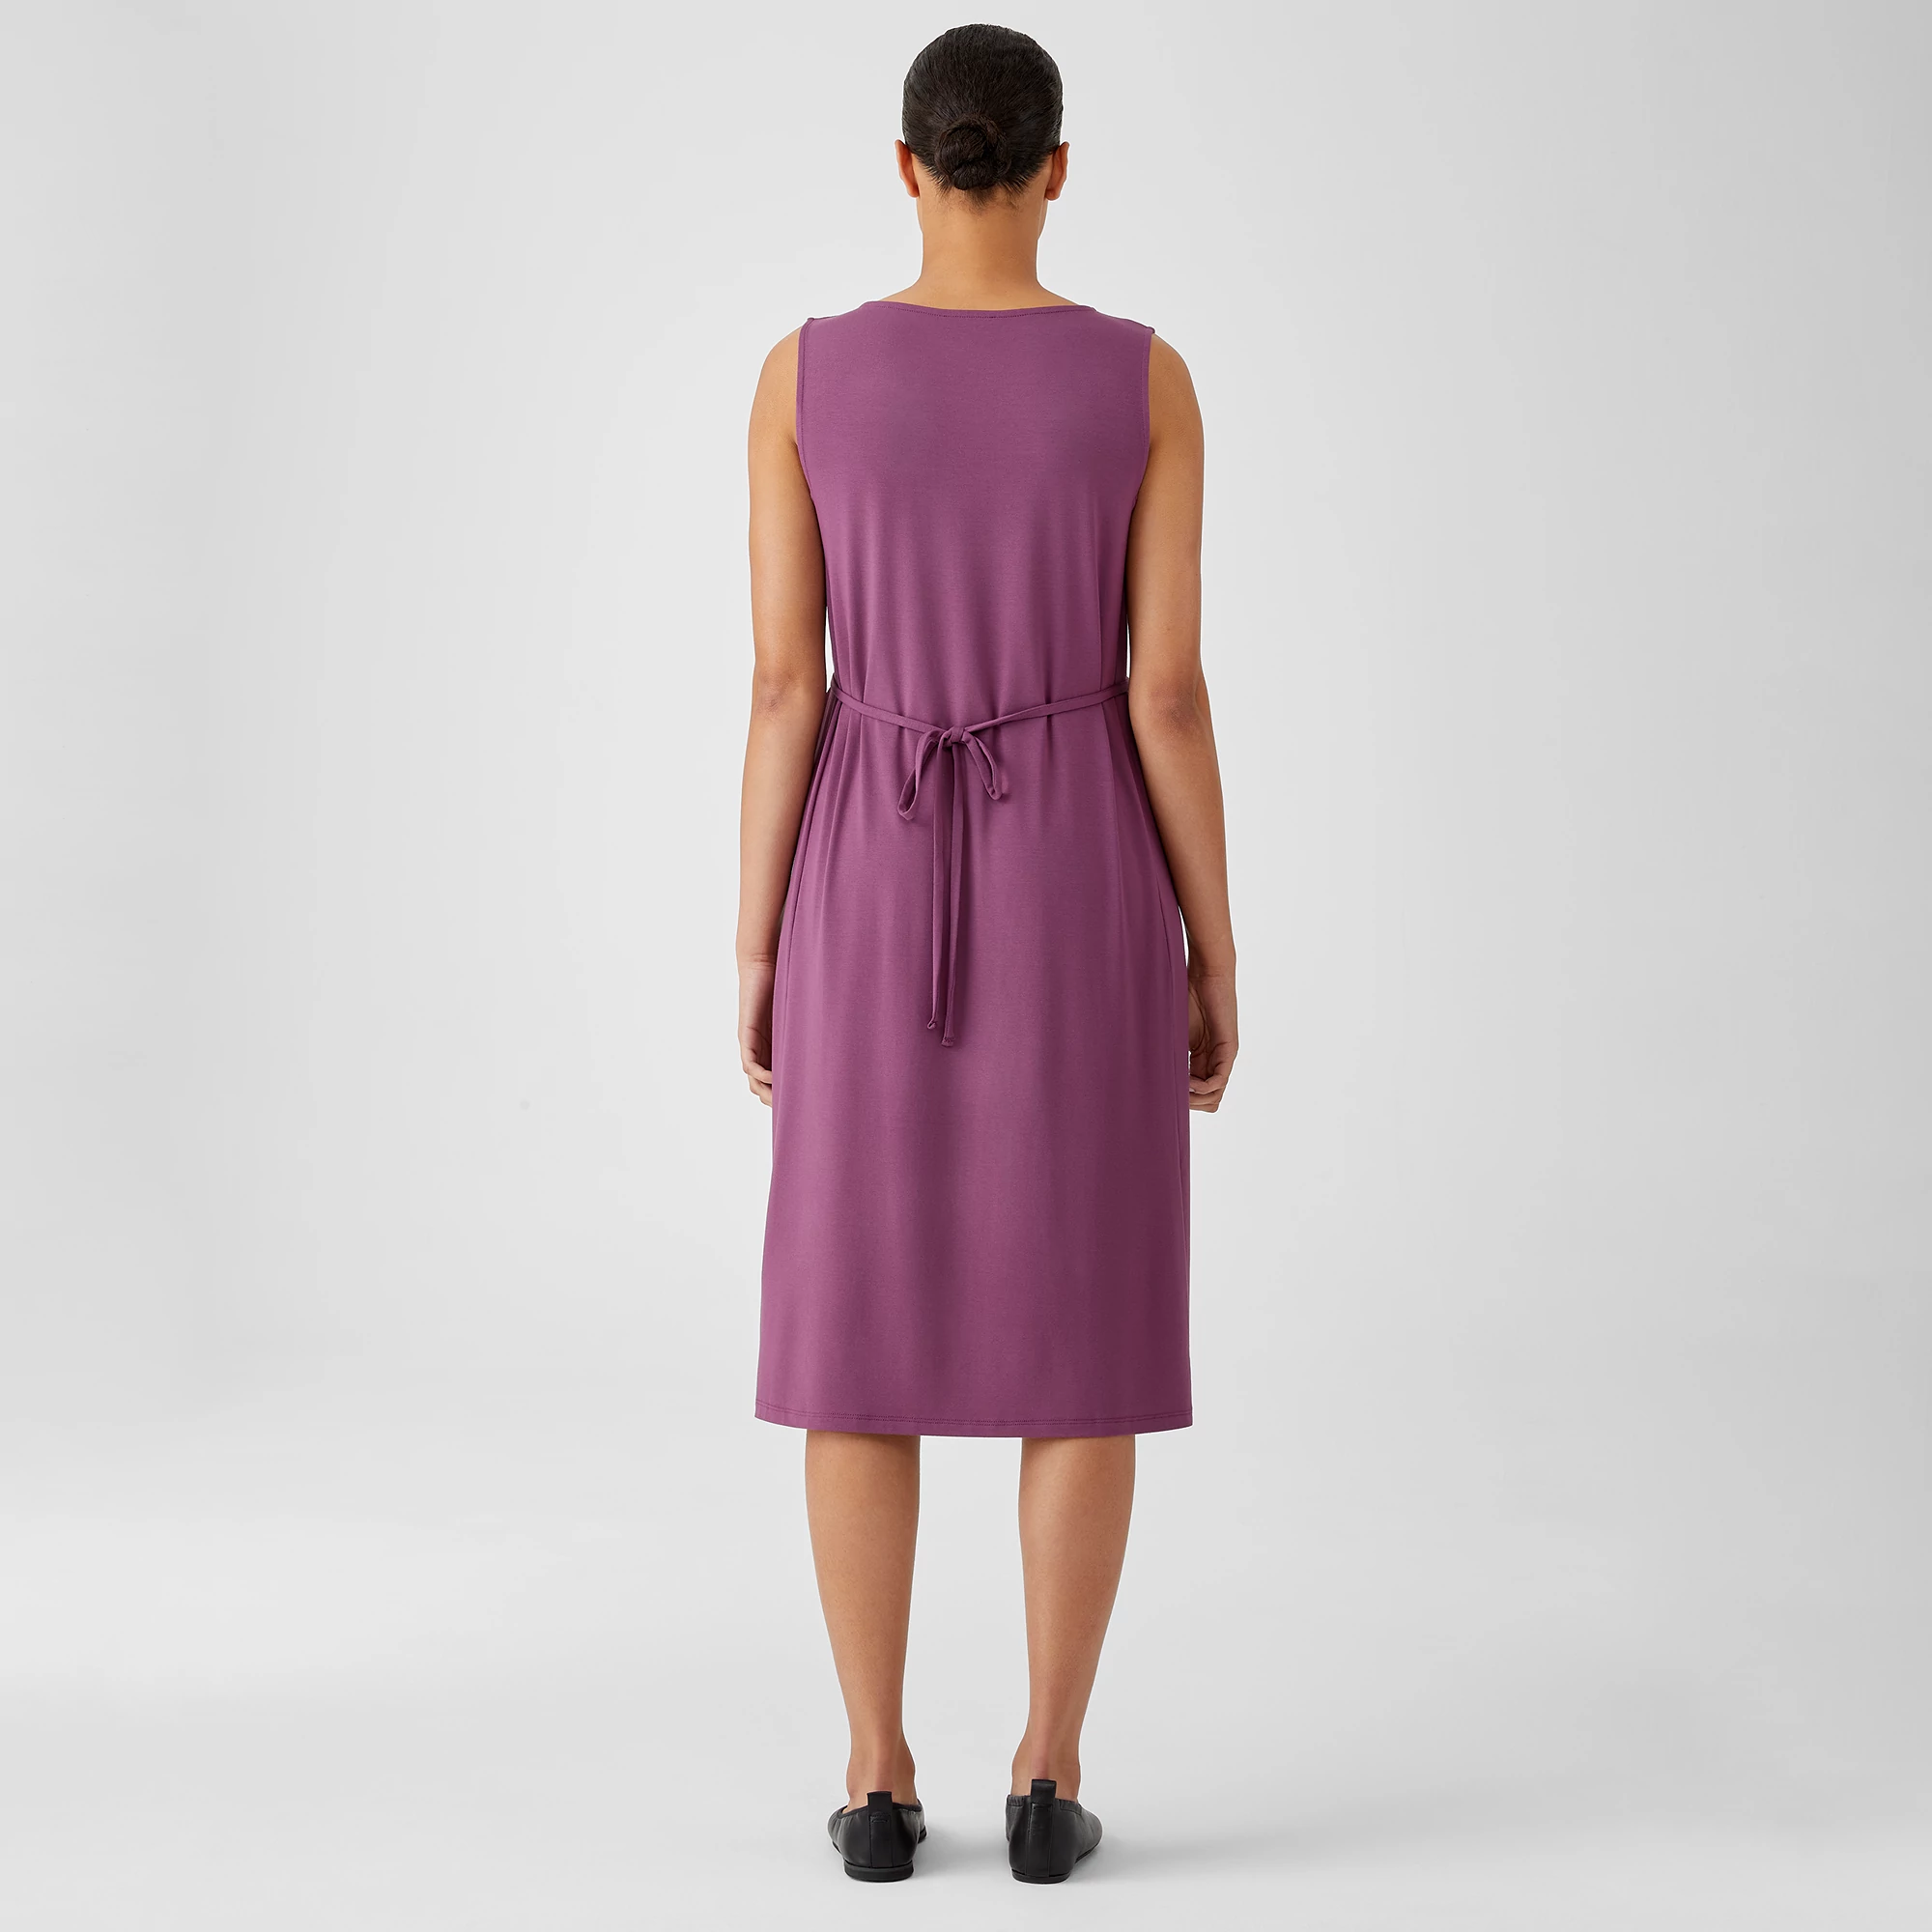 EM-095-Purple-M Letters Print Viscose Stretch Jersey Dress Fabric 